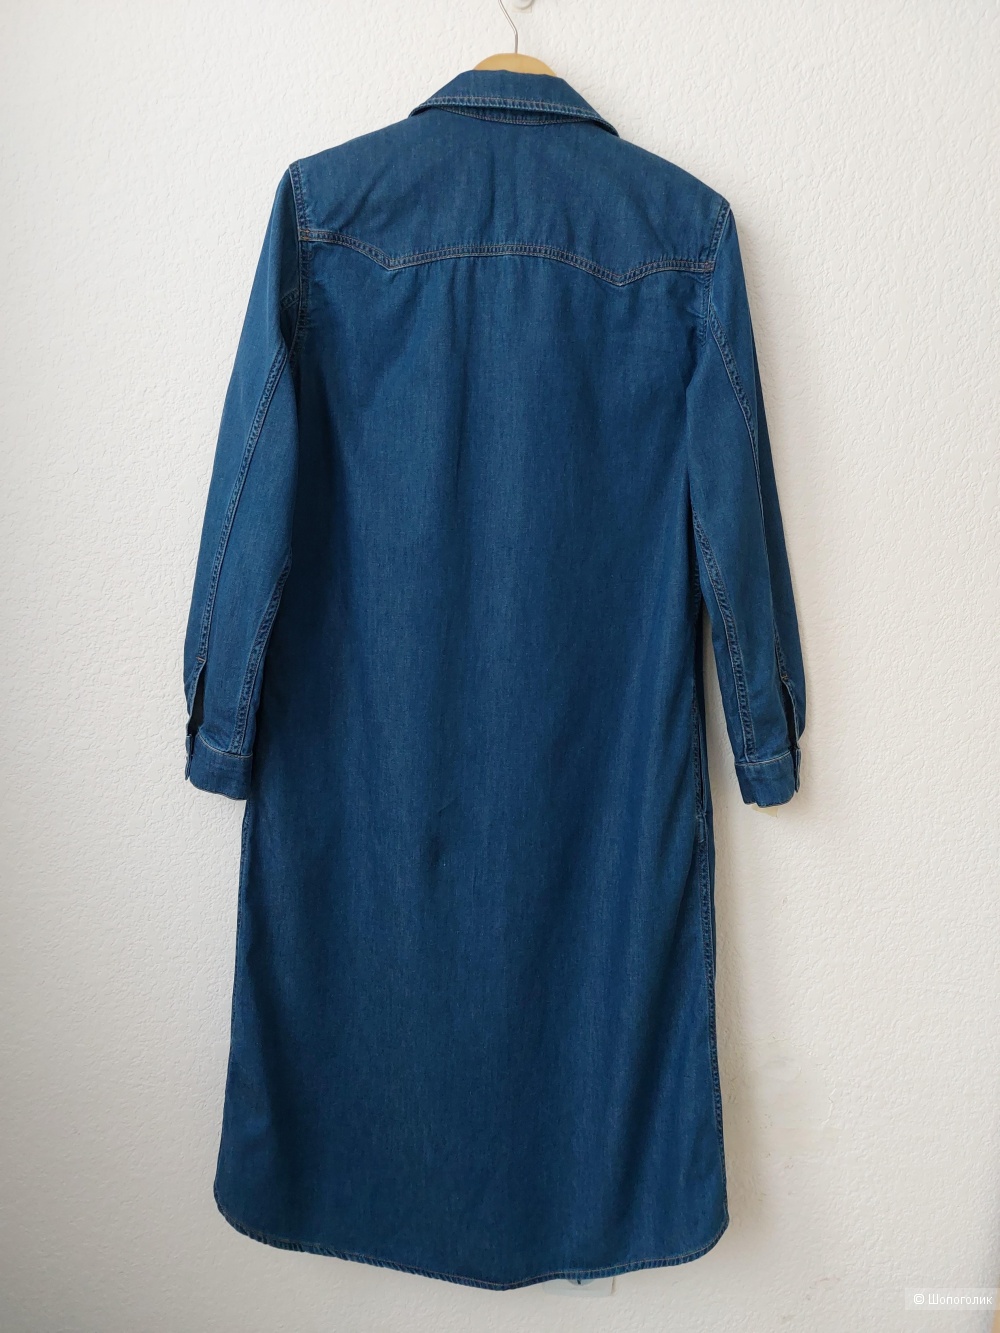 Платье Massimo Dutti L размер .